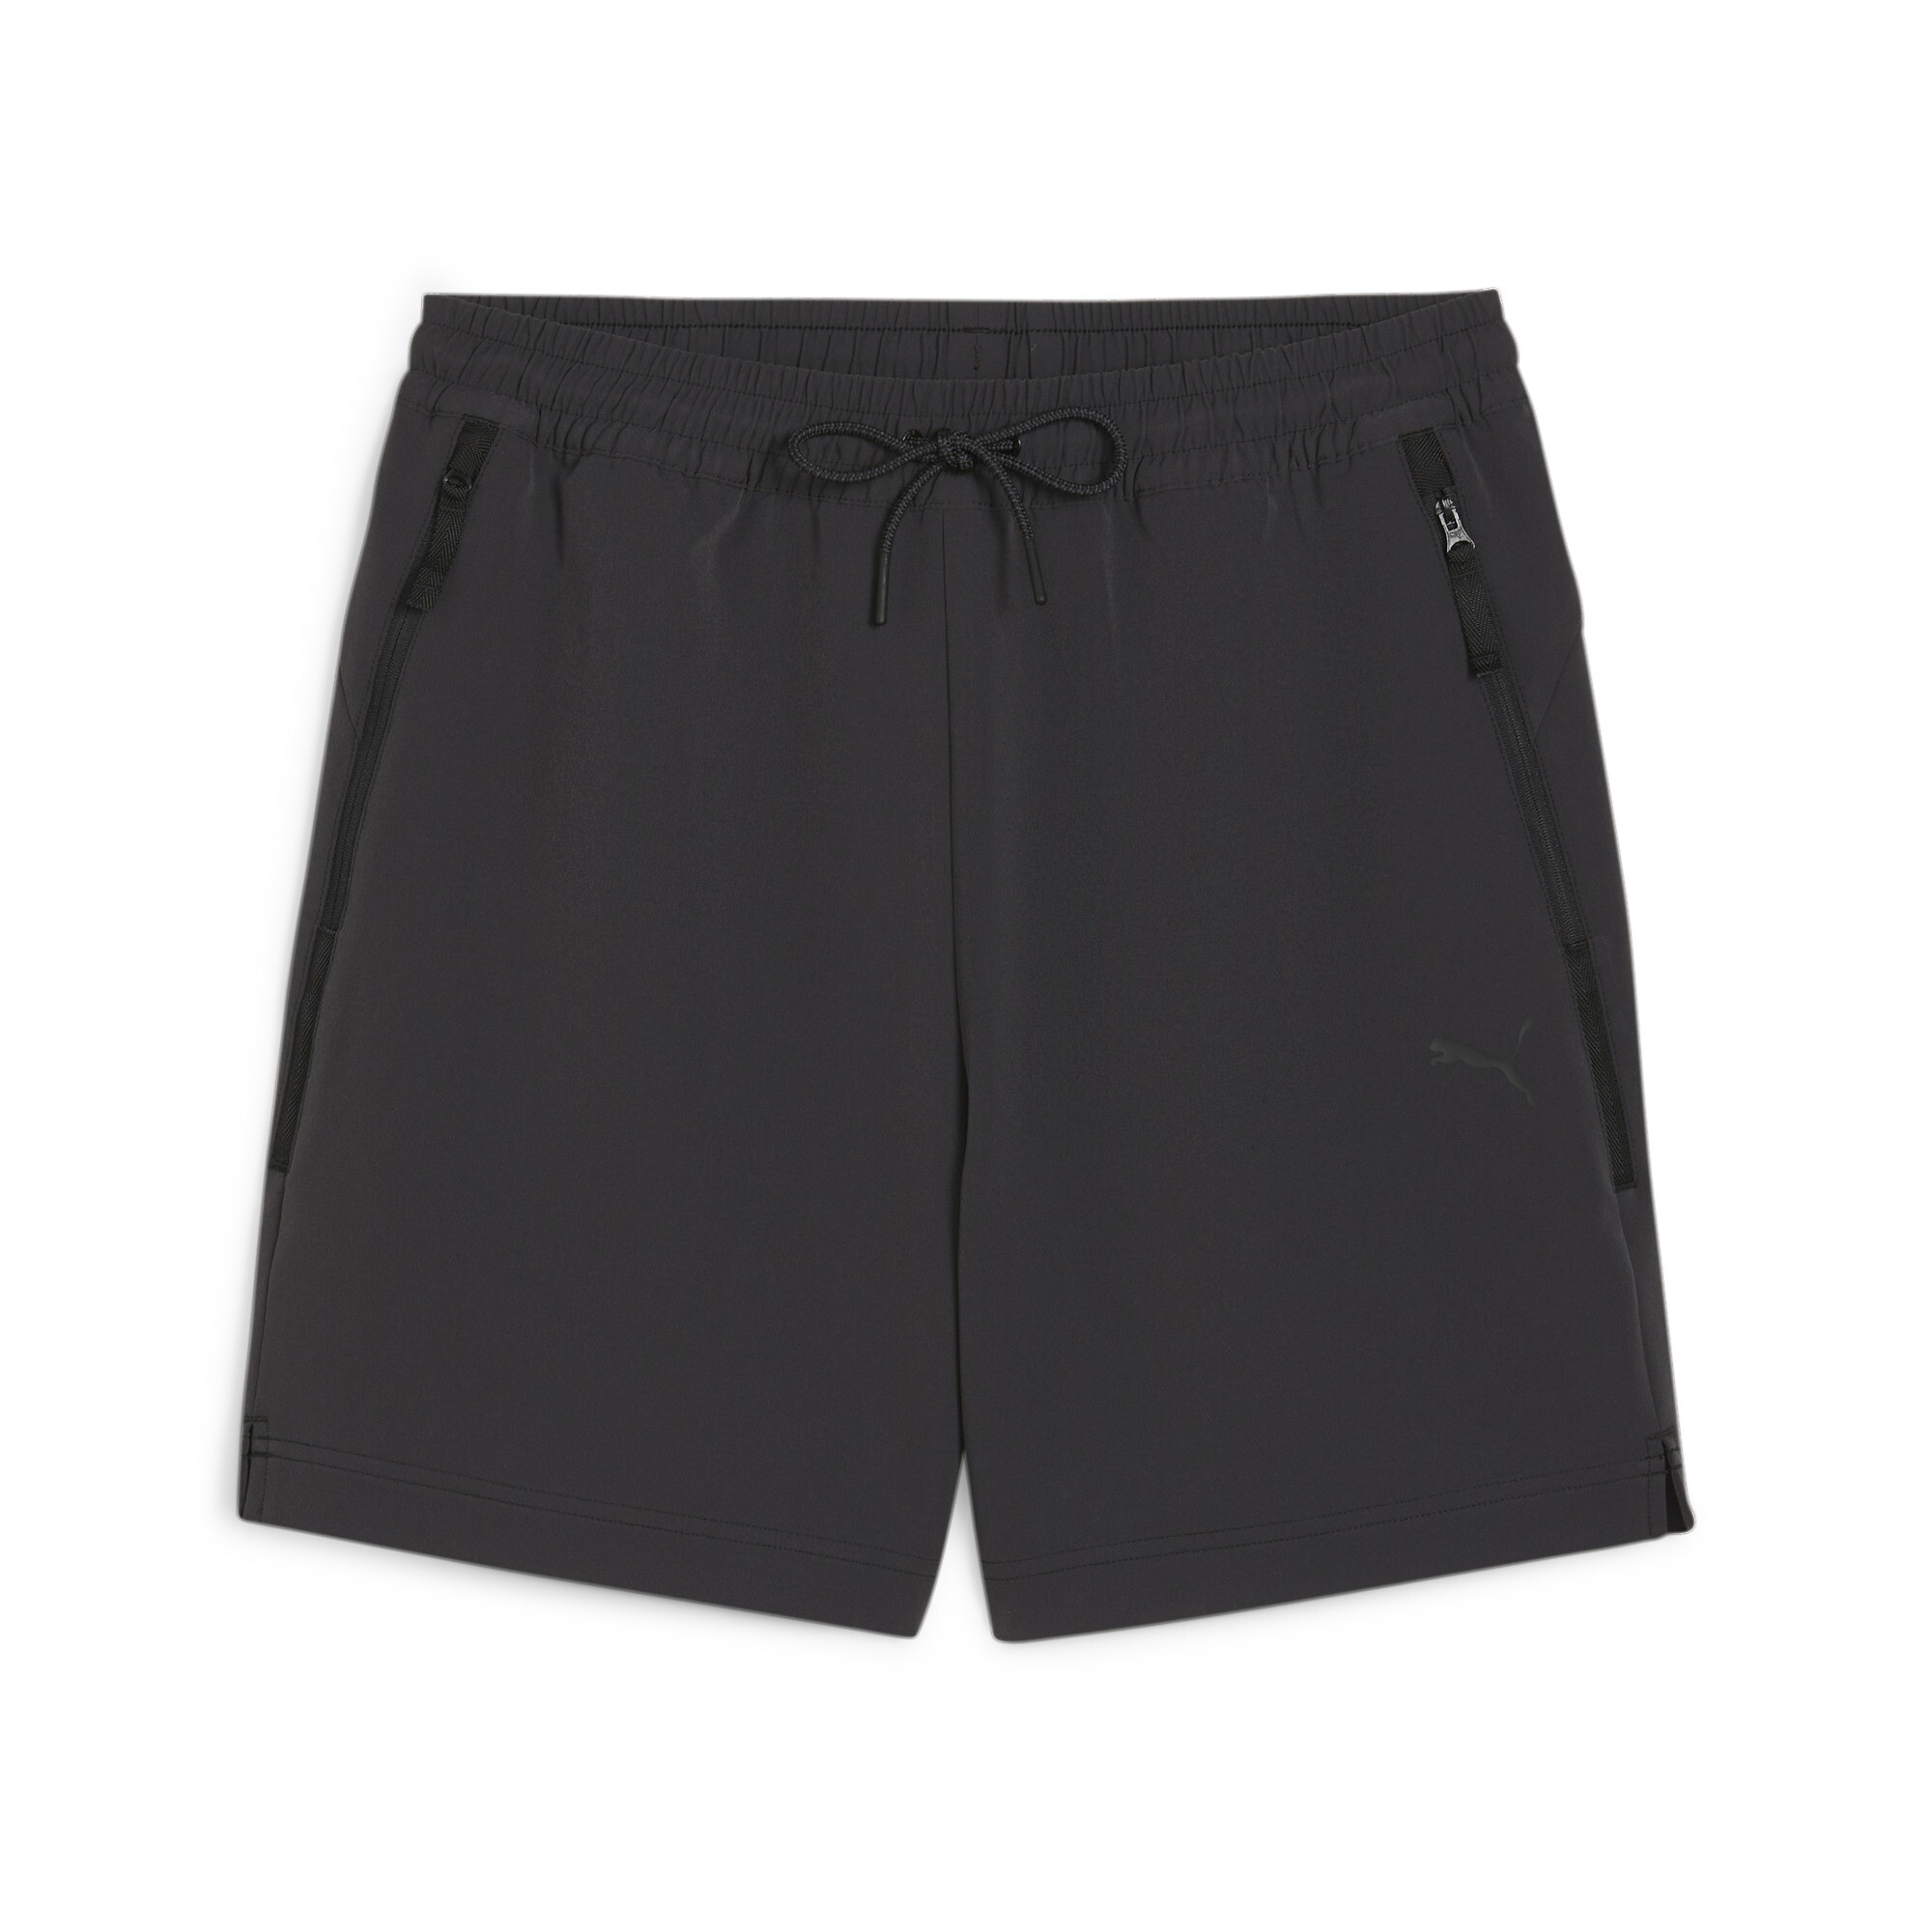 Men's PUMATECH Shorts In 10 - Black, Size Large